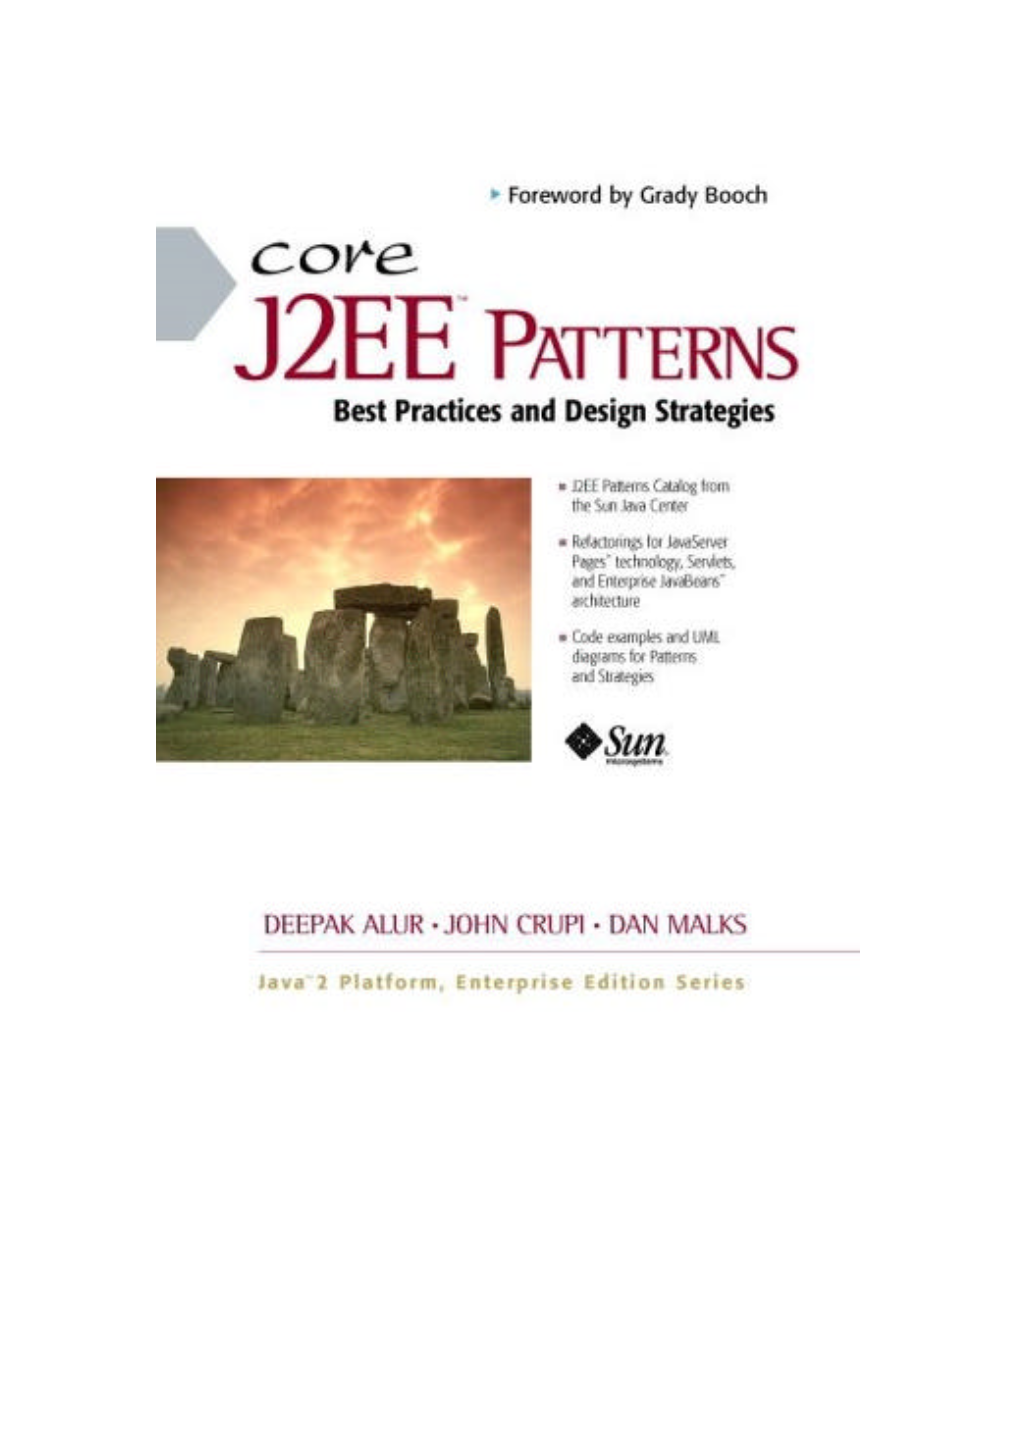 J2EE Patterns and J2EE Platform Summary